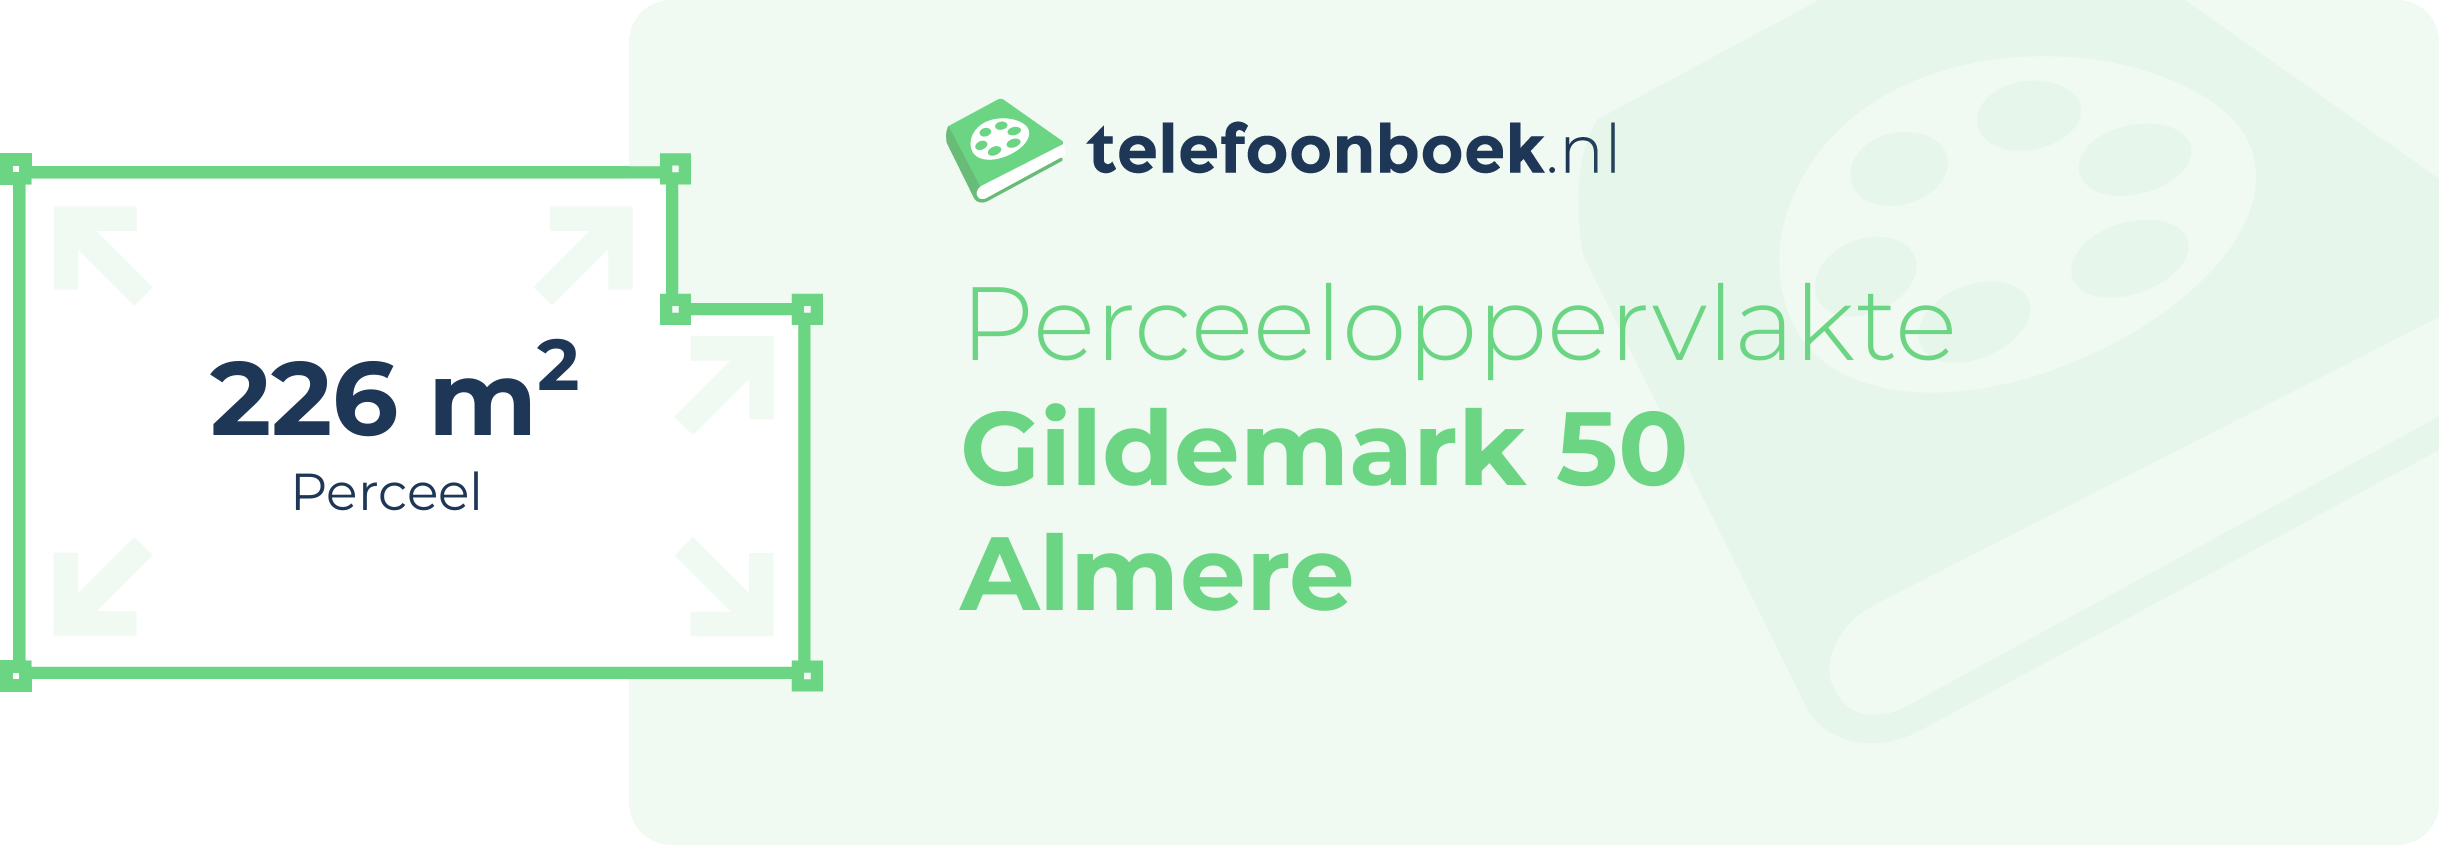 Perceeloppervlakte Gildemark 50 Almere